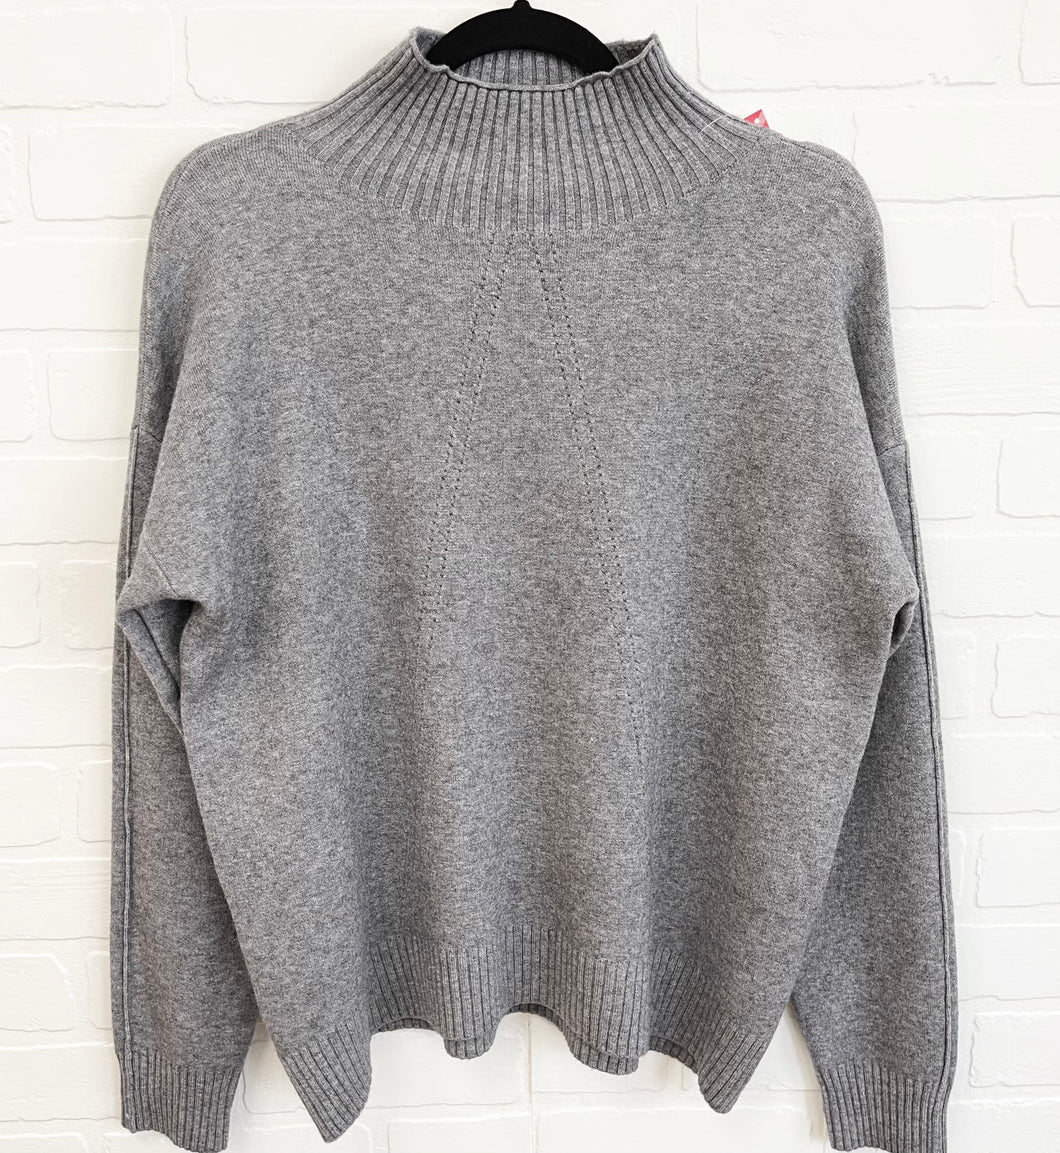 Kendra sweater 